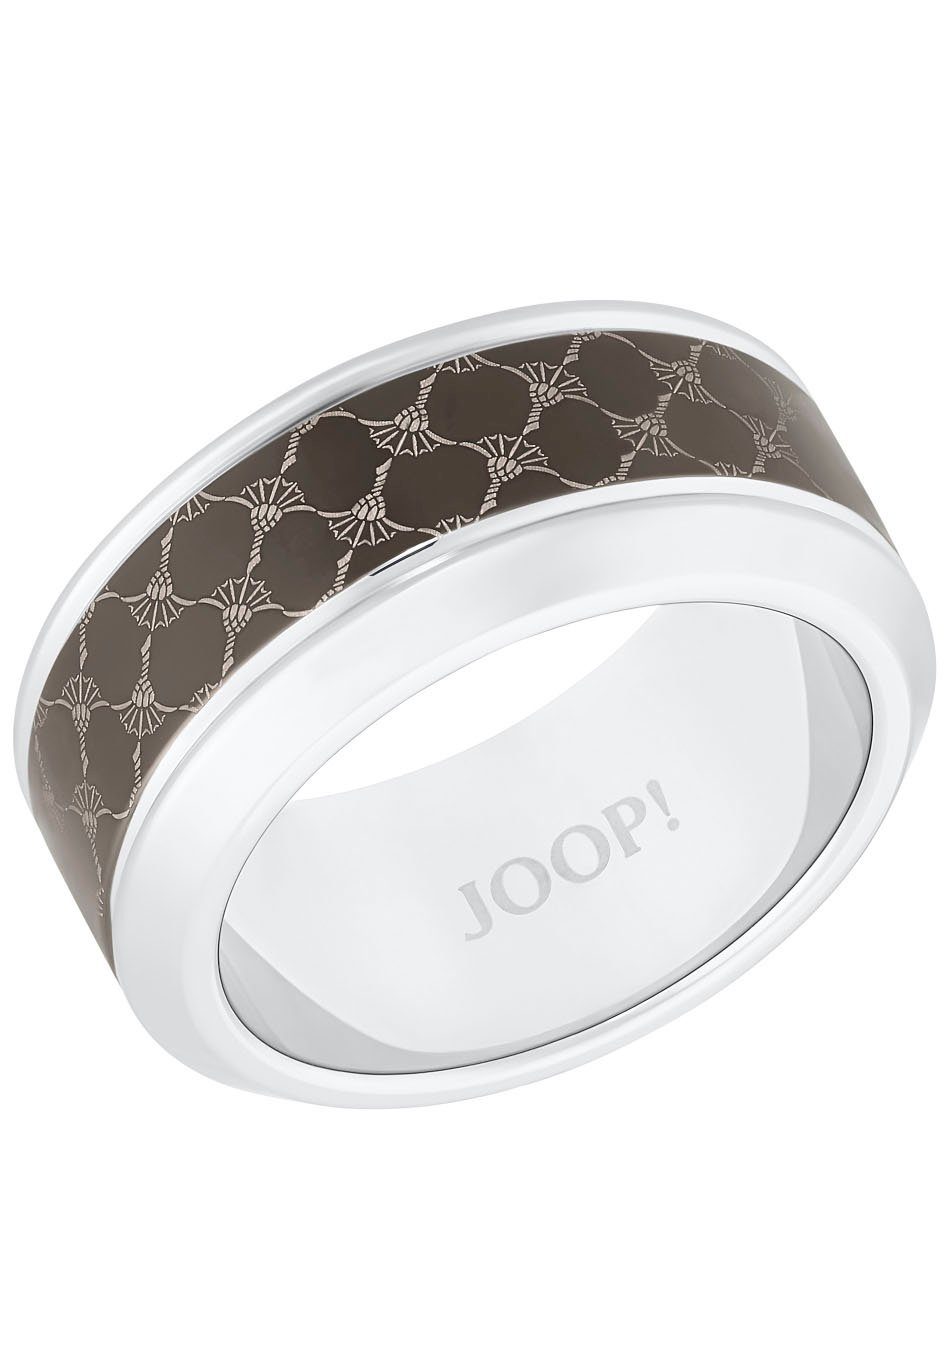 Kornblume Joop! 2036808/-09/-10/-11, mit markentypischen JOOP! Ring, Herren Fingerring verziert der